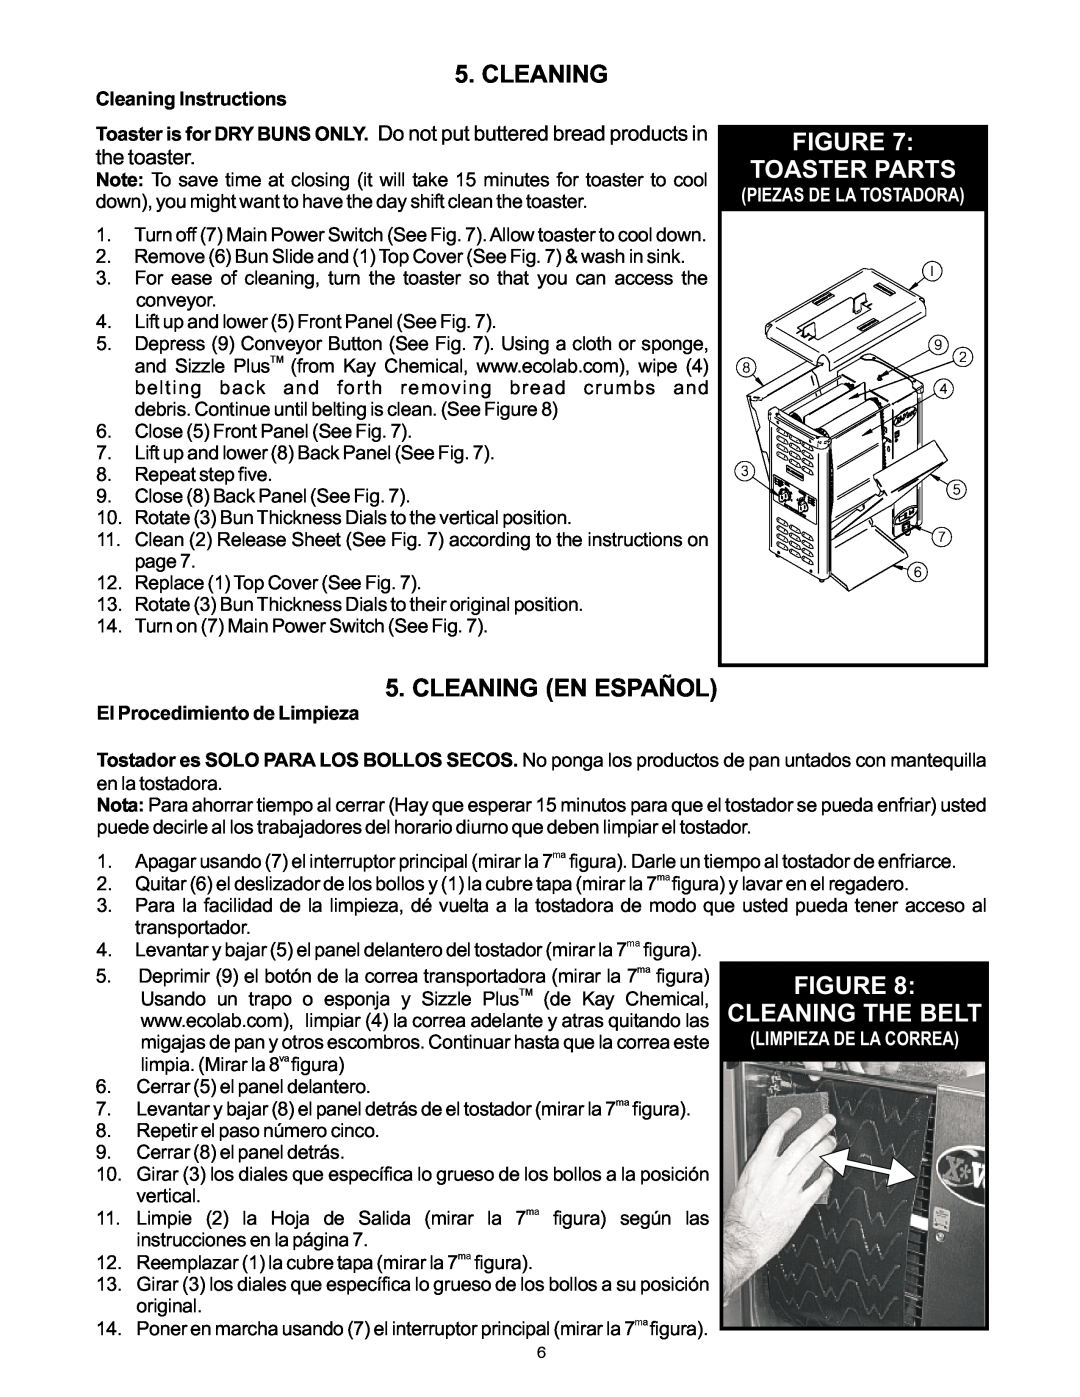 APW Wyott VSX manual Toaster Parts, Cleaning En Español, Cleaning The Belt, the toaster, Cleaning Instructions 